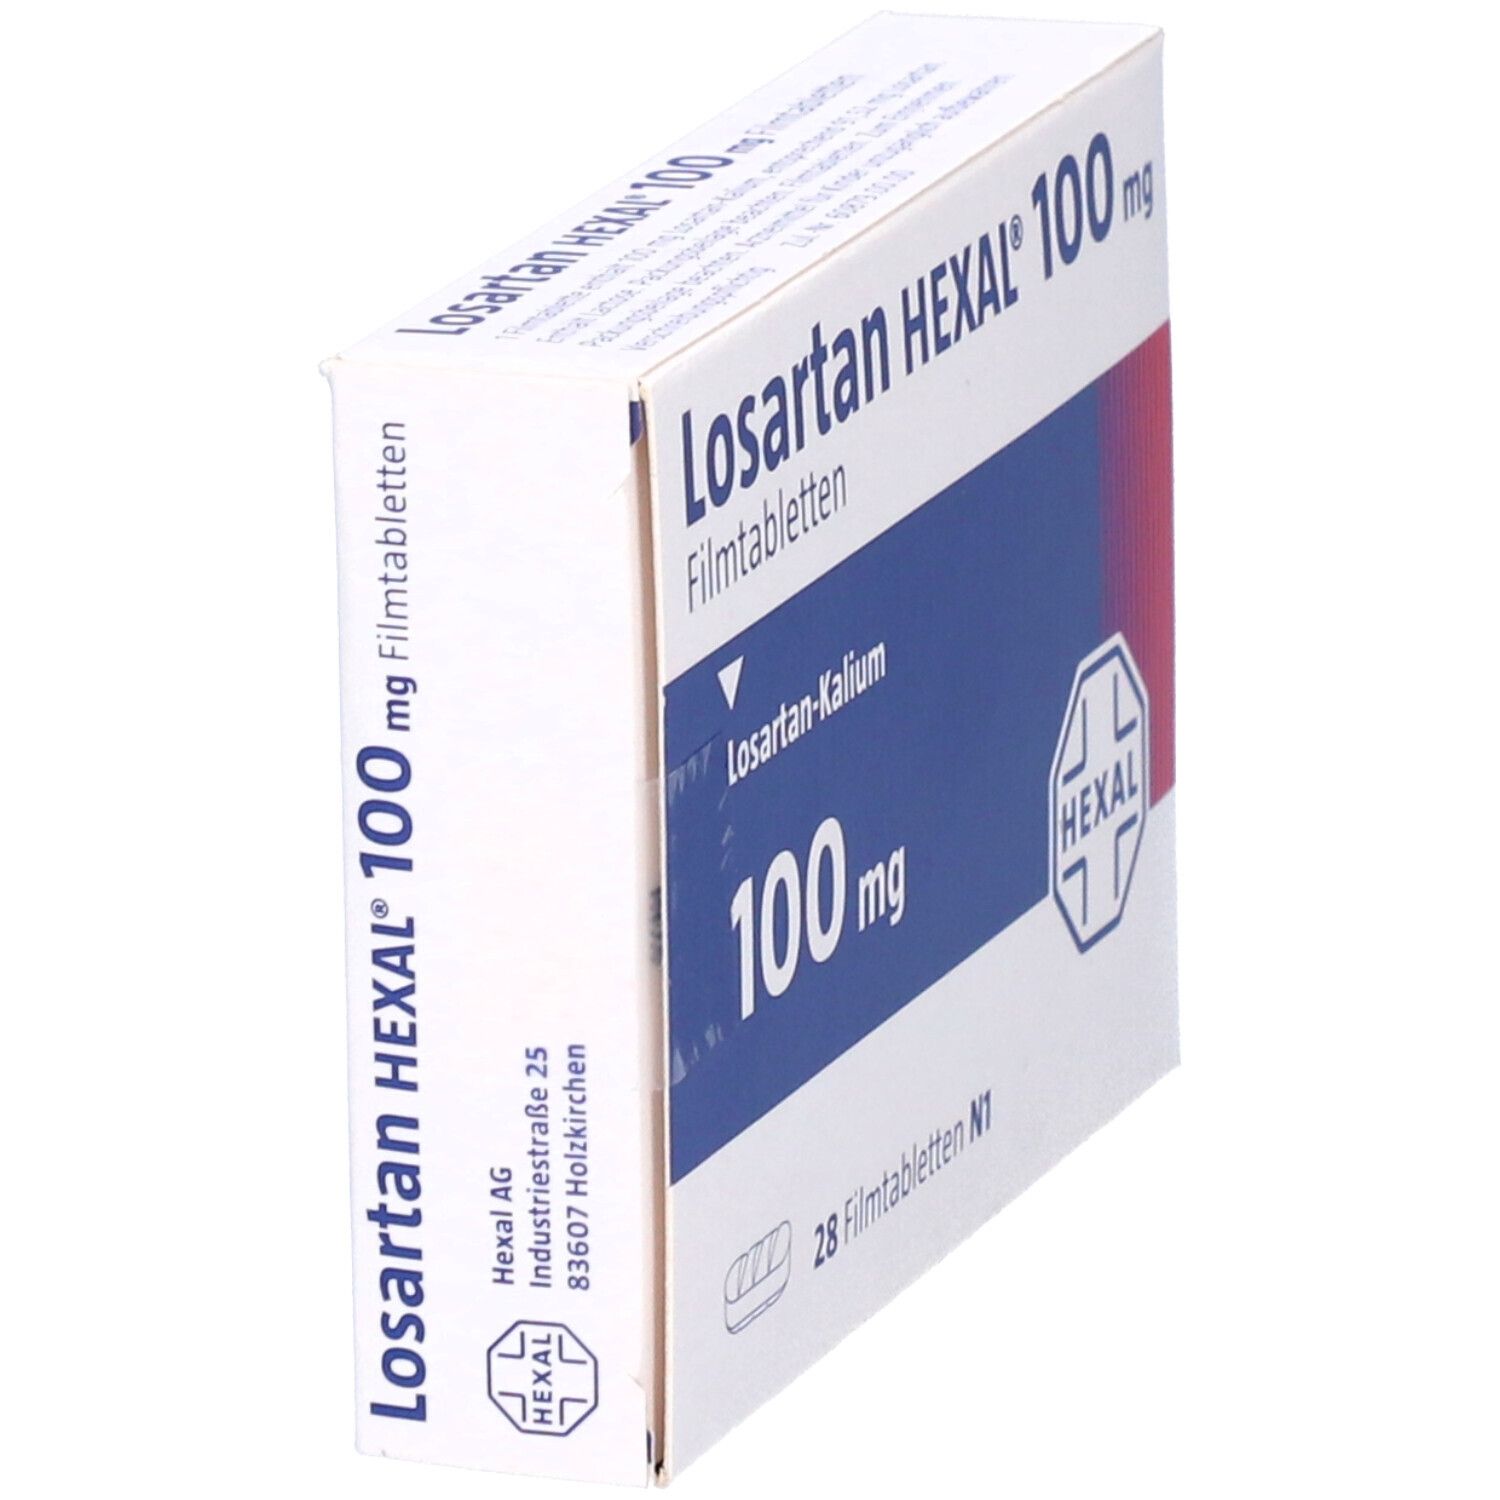 Losartan HEXAL® 100 mg